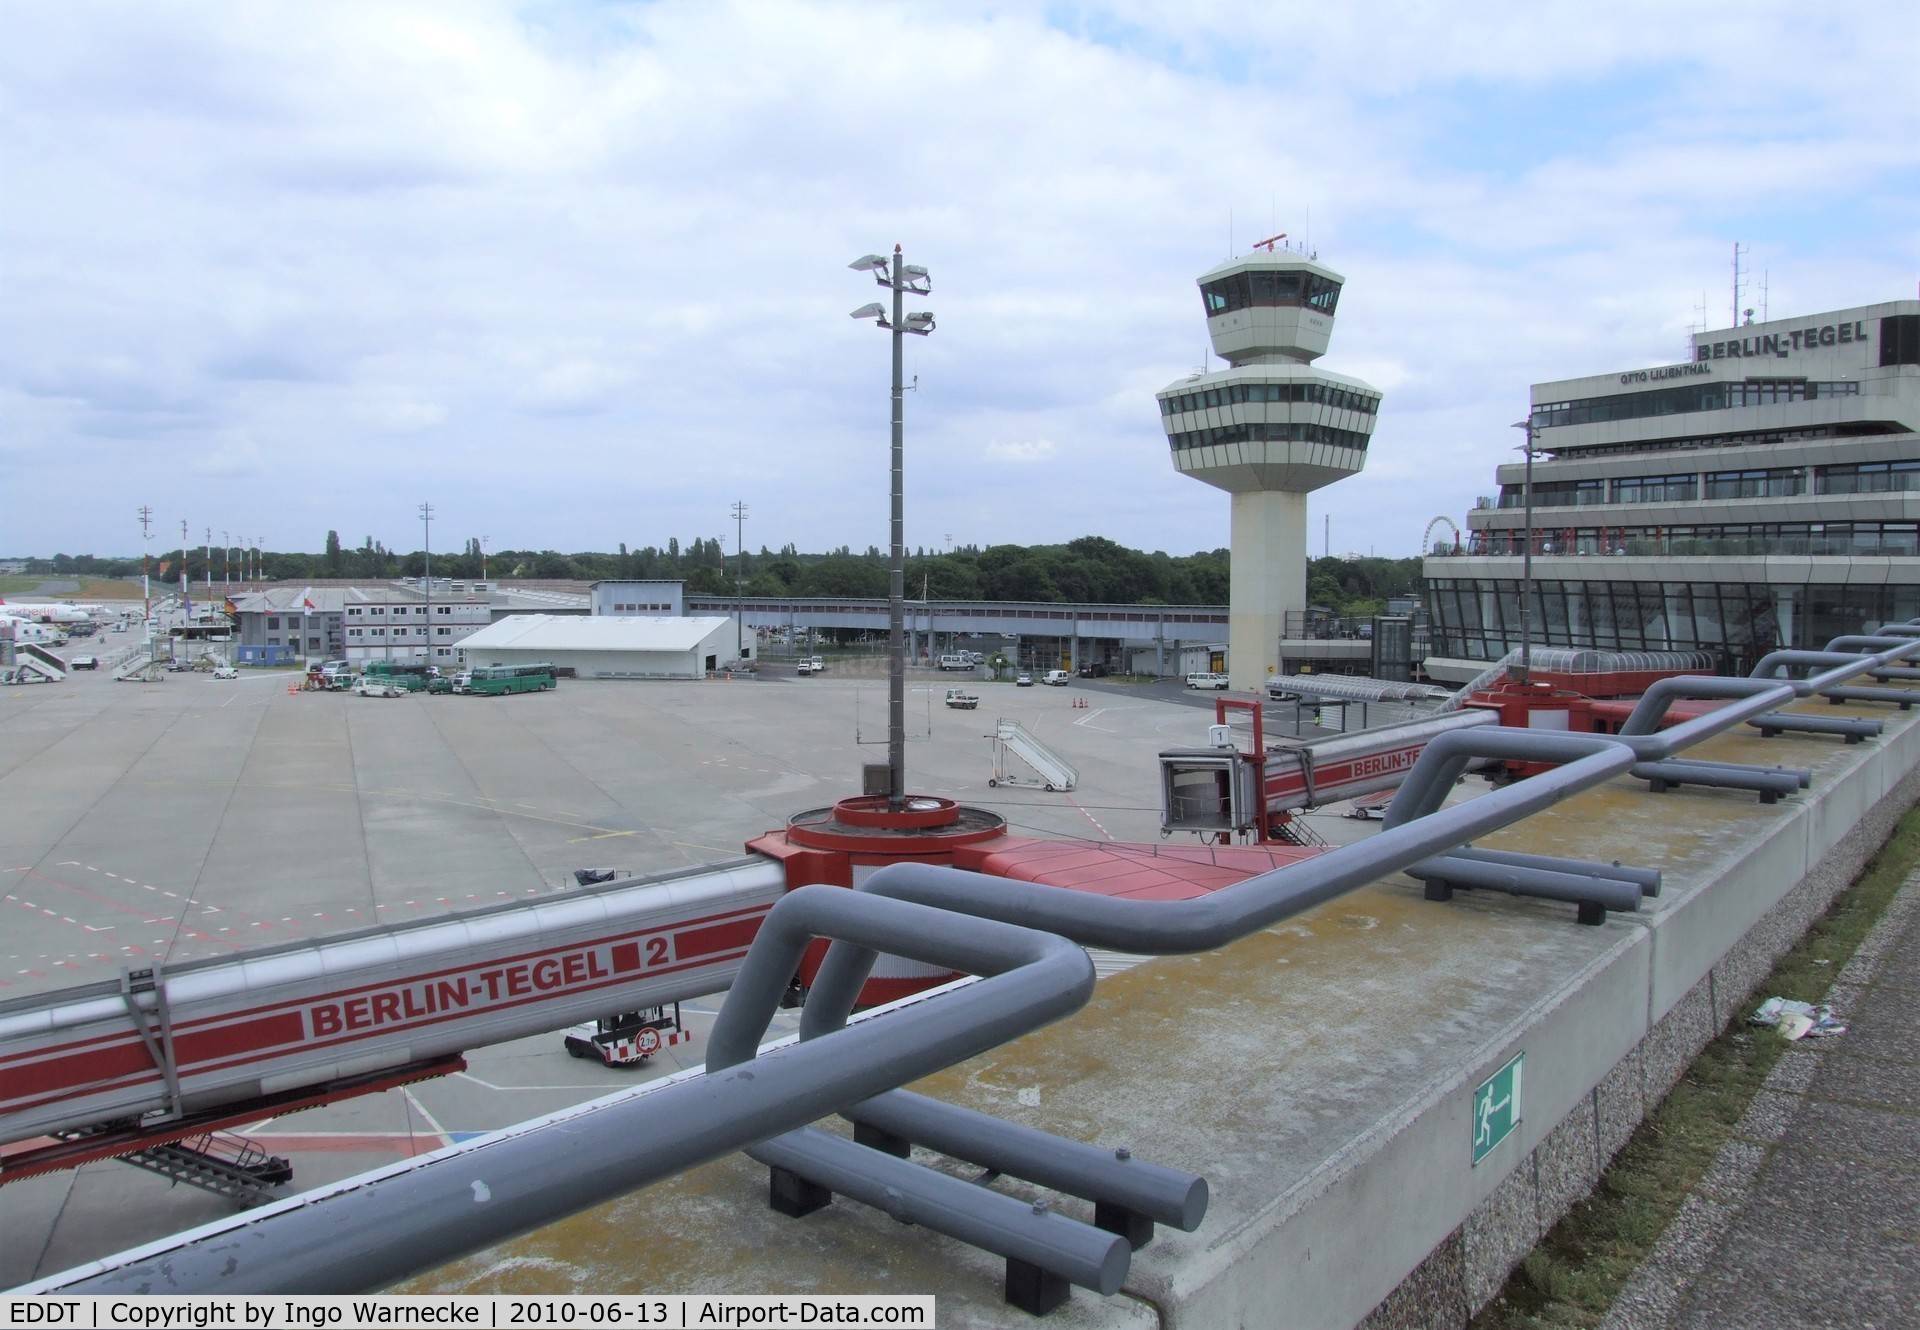 Tegel International Airport (closing in 2011), Berlin Germany (EDDT) - terminals, tower and apron at Berlin Tegel airport